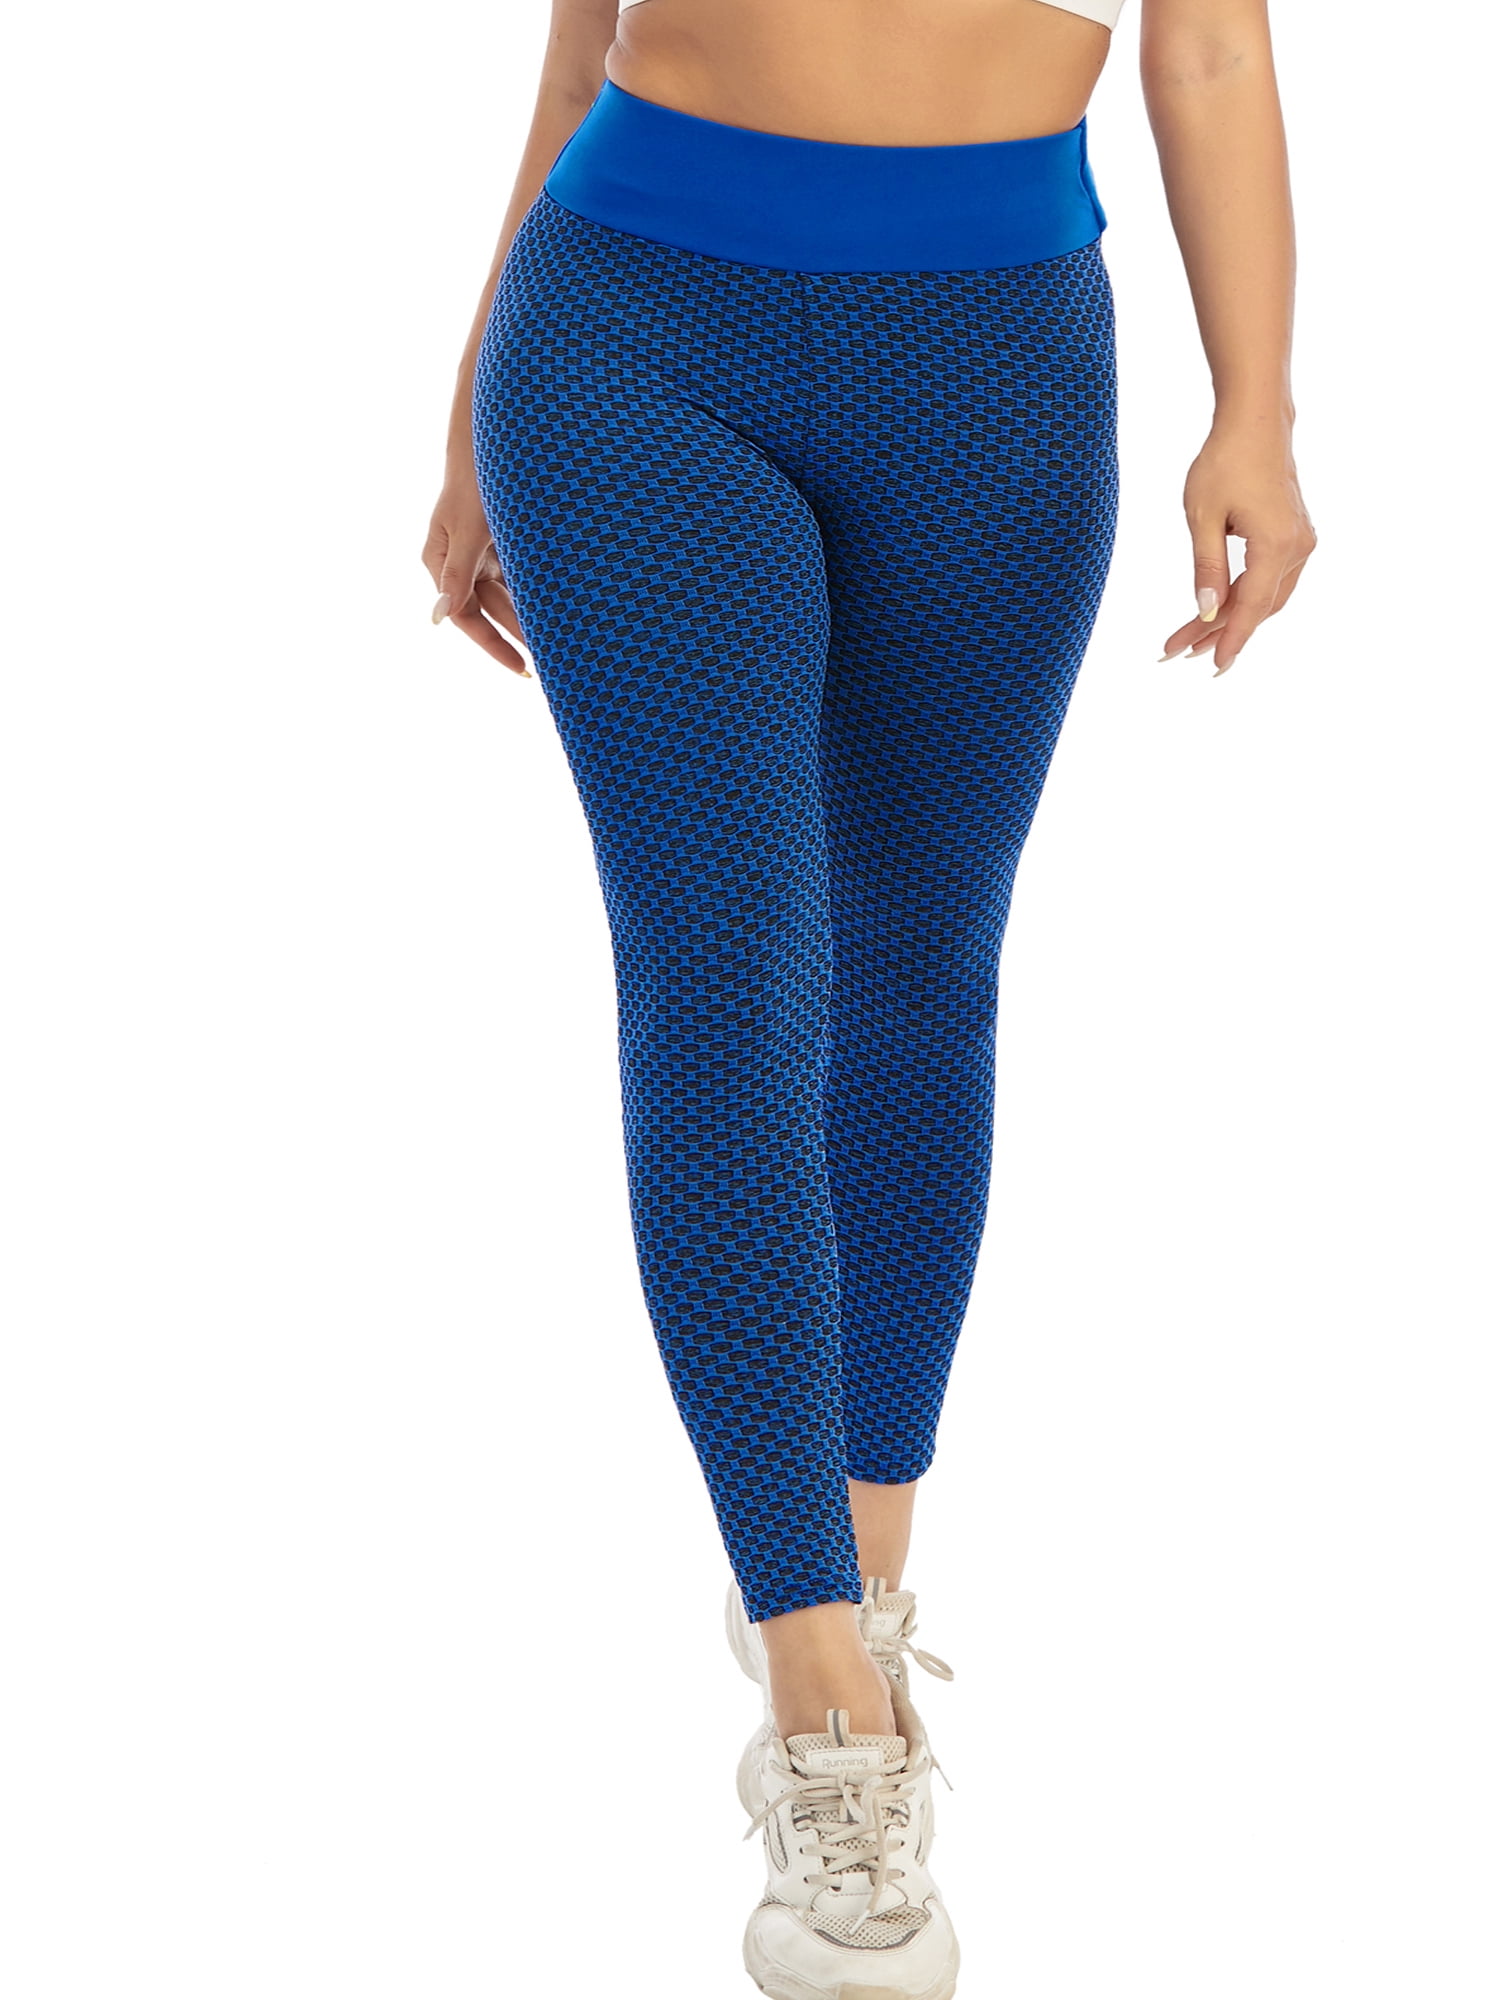 Buy BLUEENJOY 3 Pack Leggings for Women-Butt Lift High Waisted Tummy  Control Yoga Pants-Workout Running Leggings at